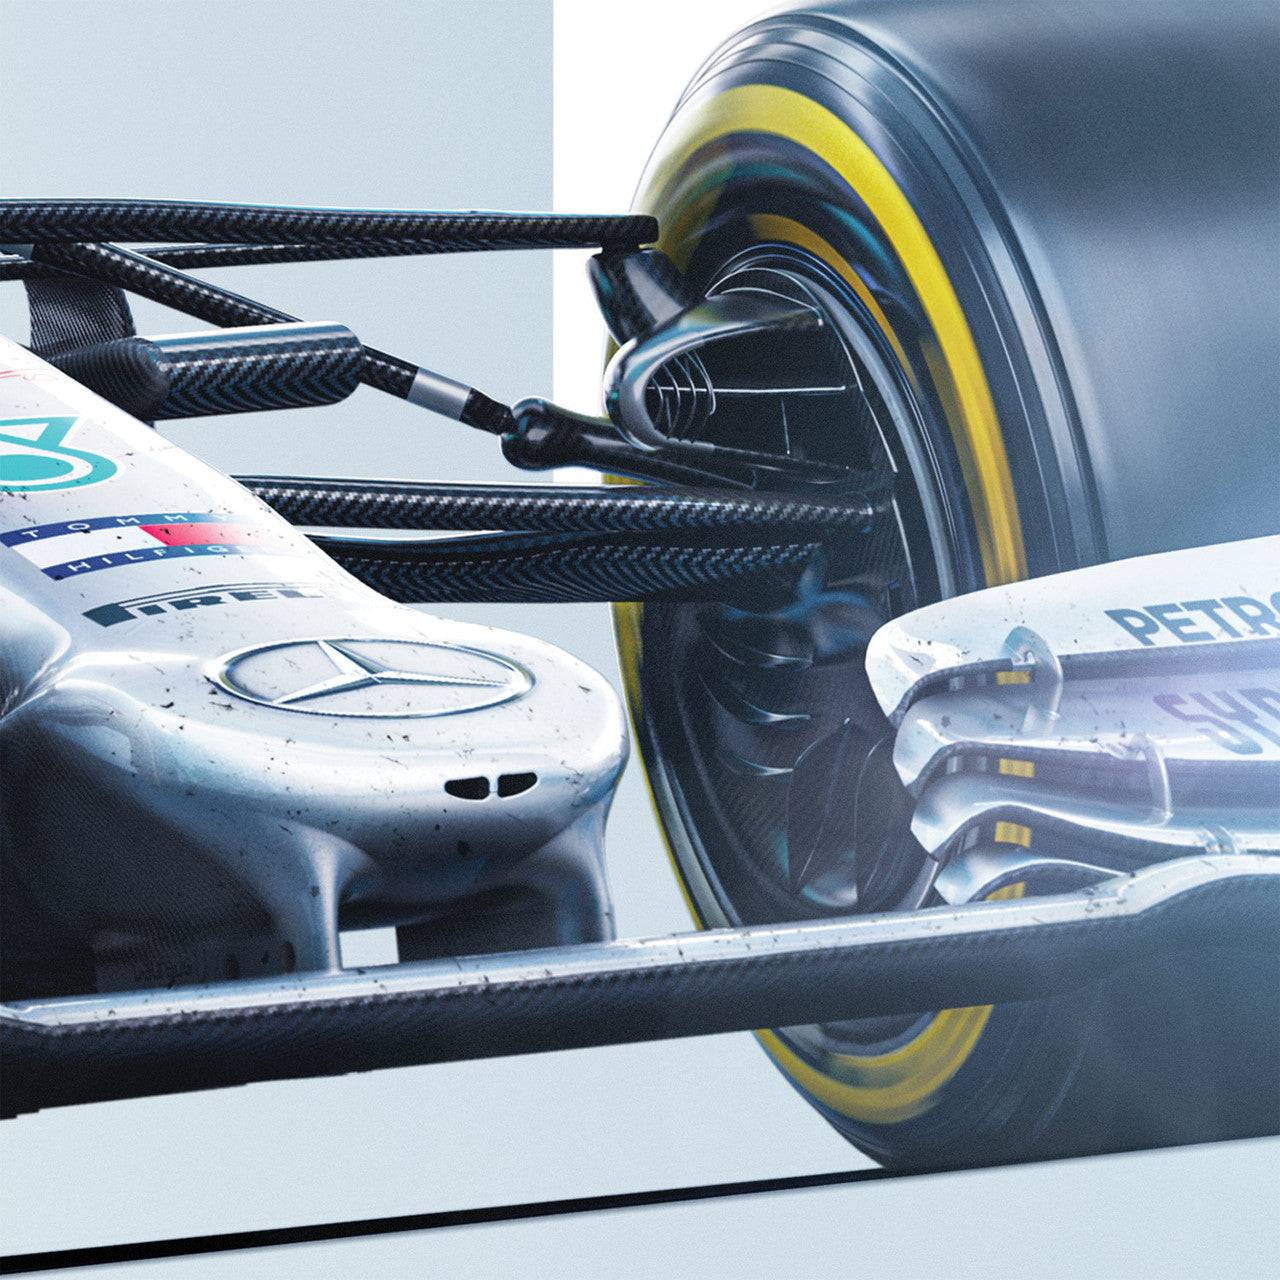 Mercedes-AMG Petronas Motorsport - 2019 - Lewis Hamilton - Limited Edition